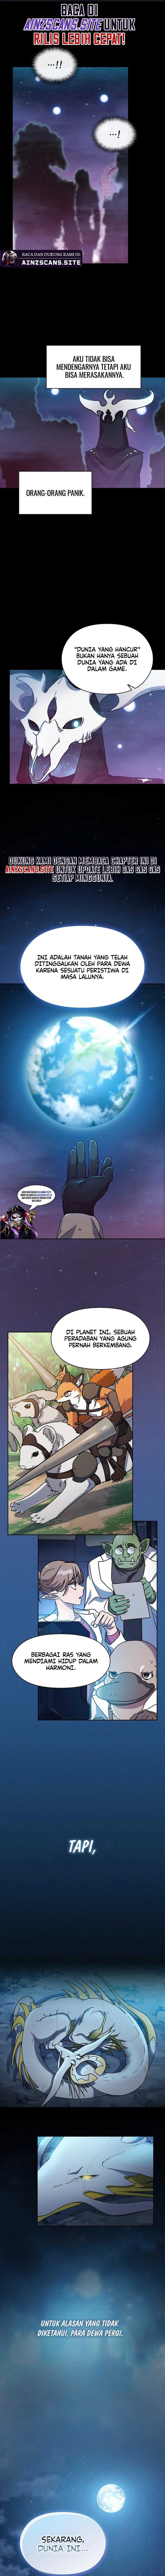 The Nebula’s Civilization Chapter 02 Image 1